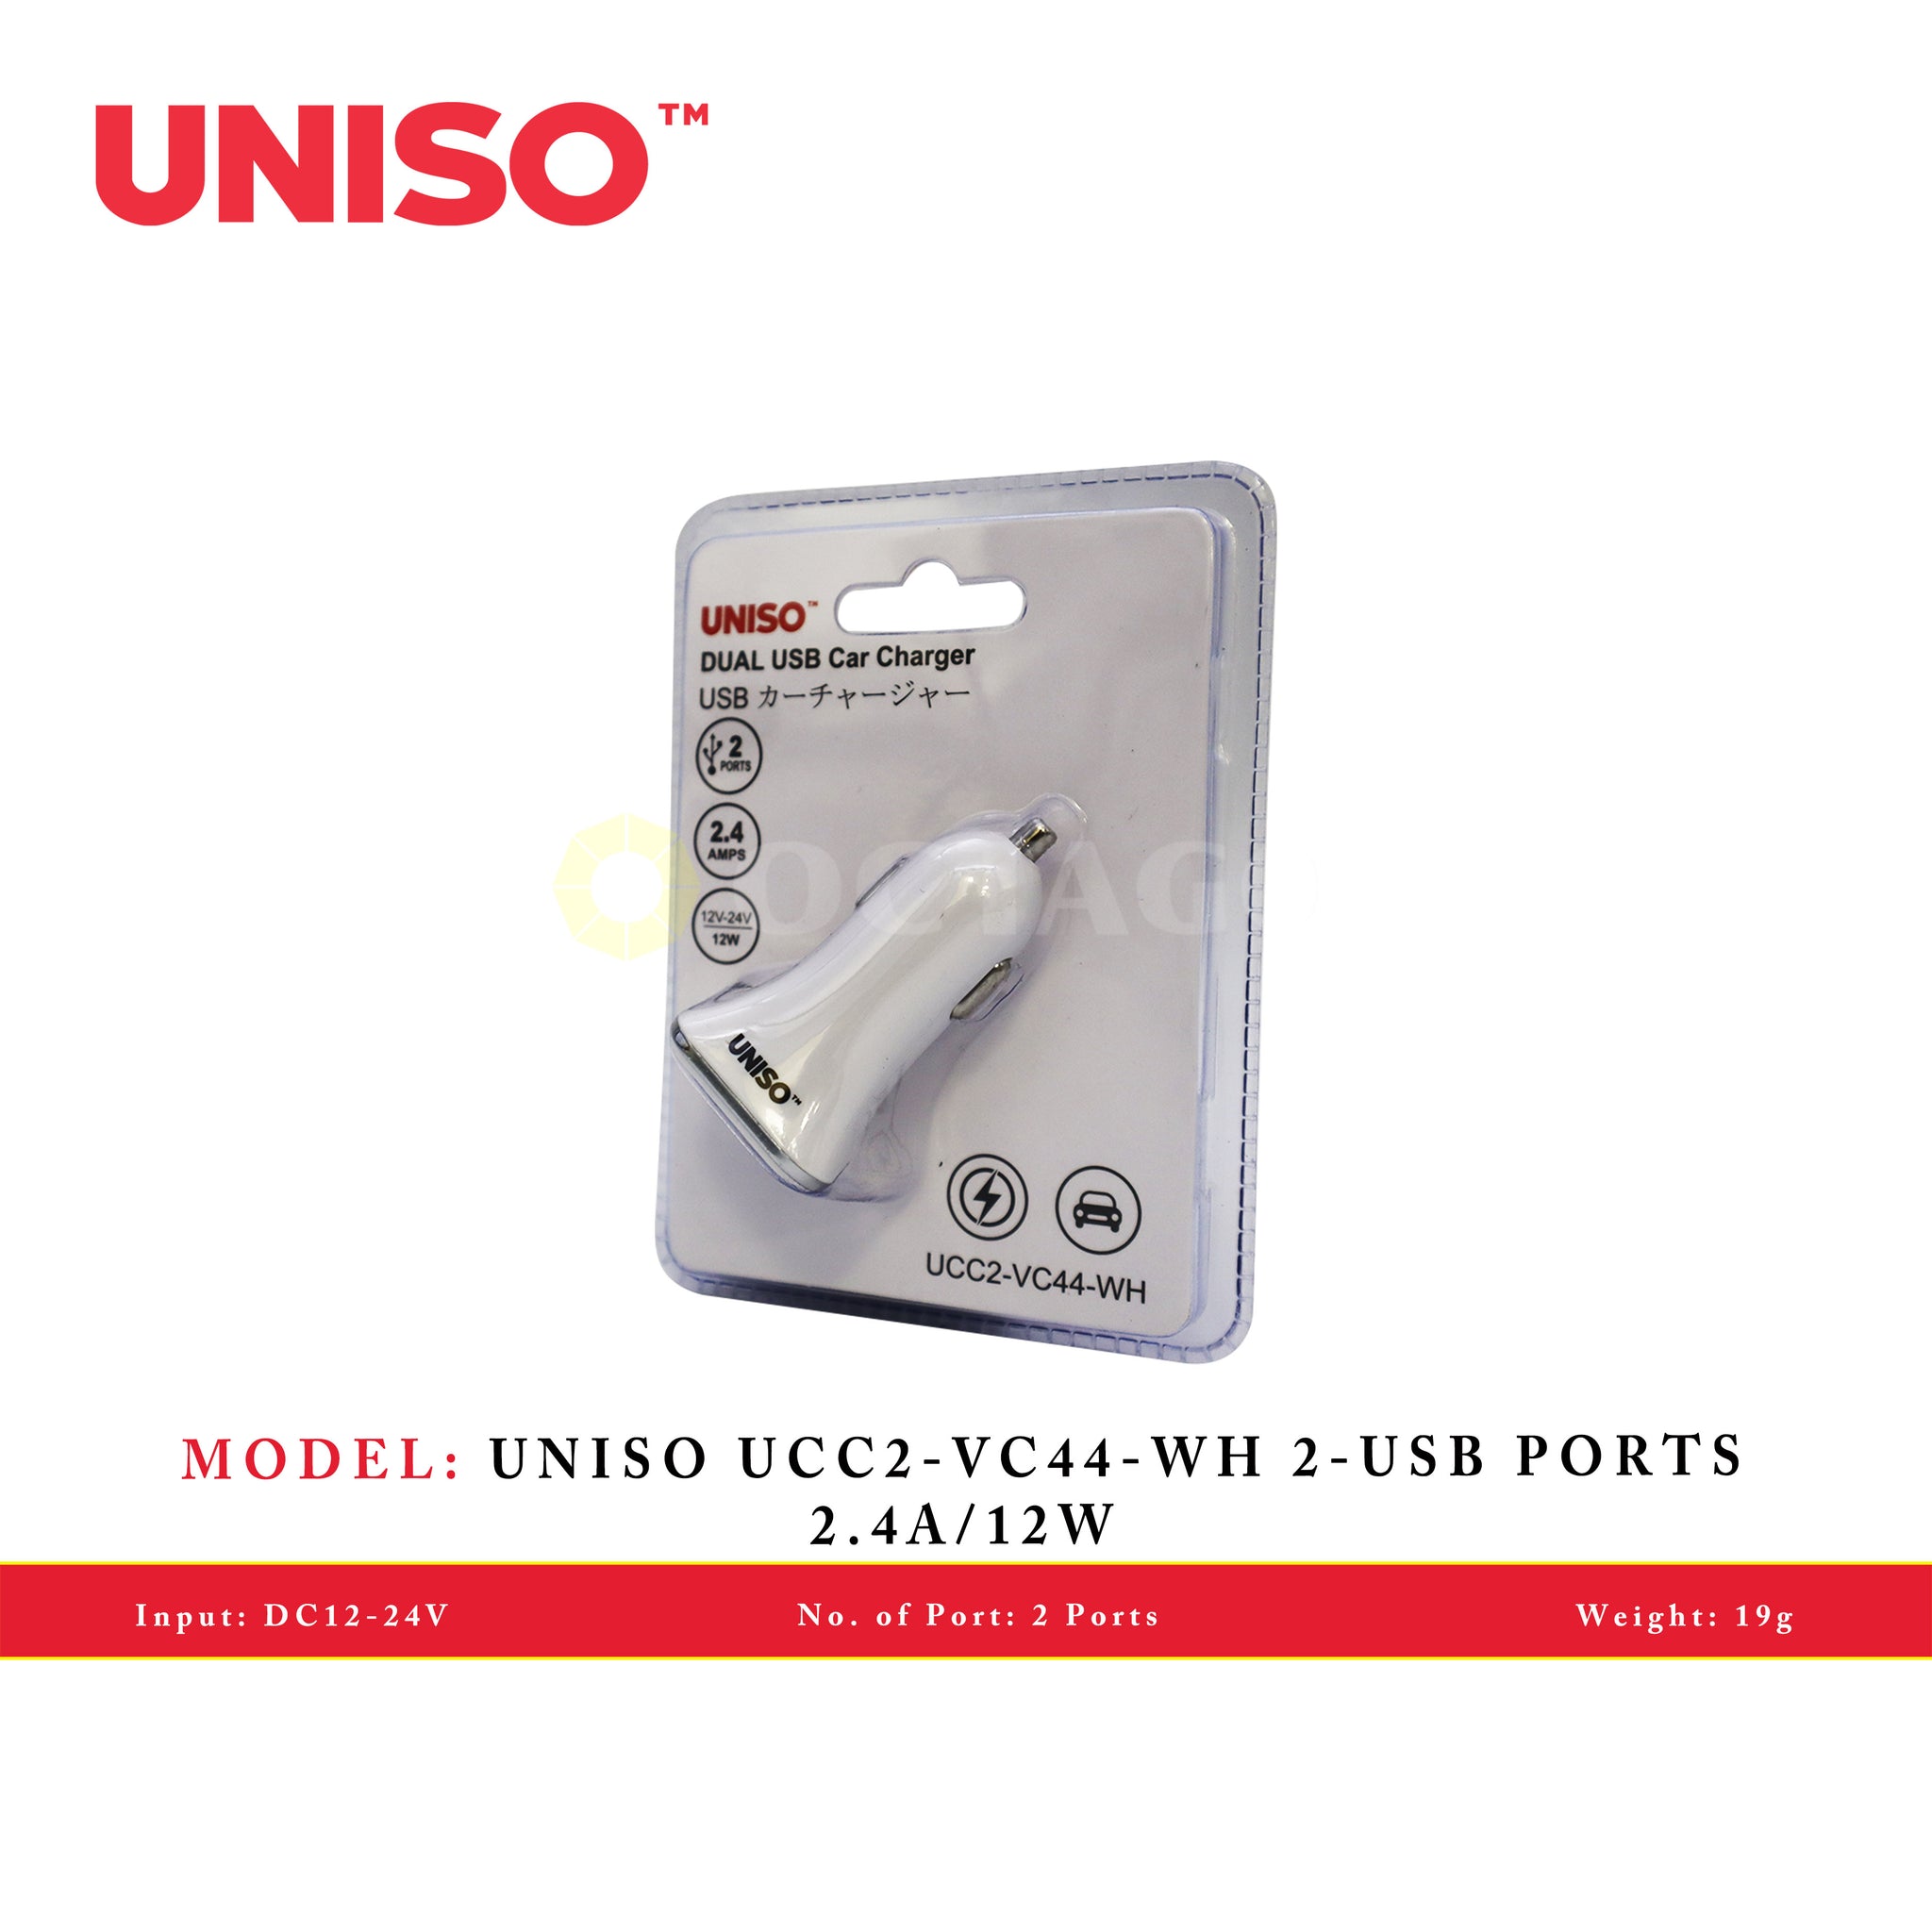 UNISO UCC2-VC44-WH 2-USB PORTS 2.4A/12W